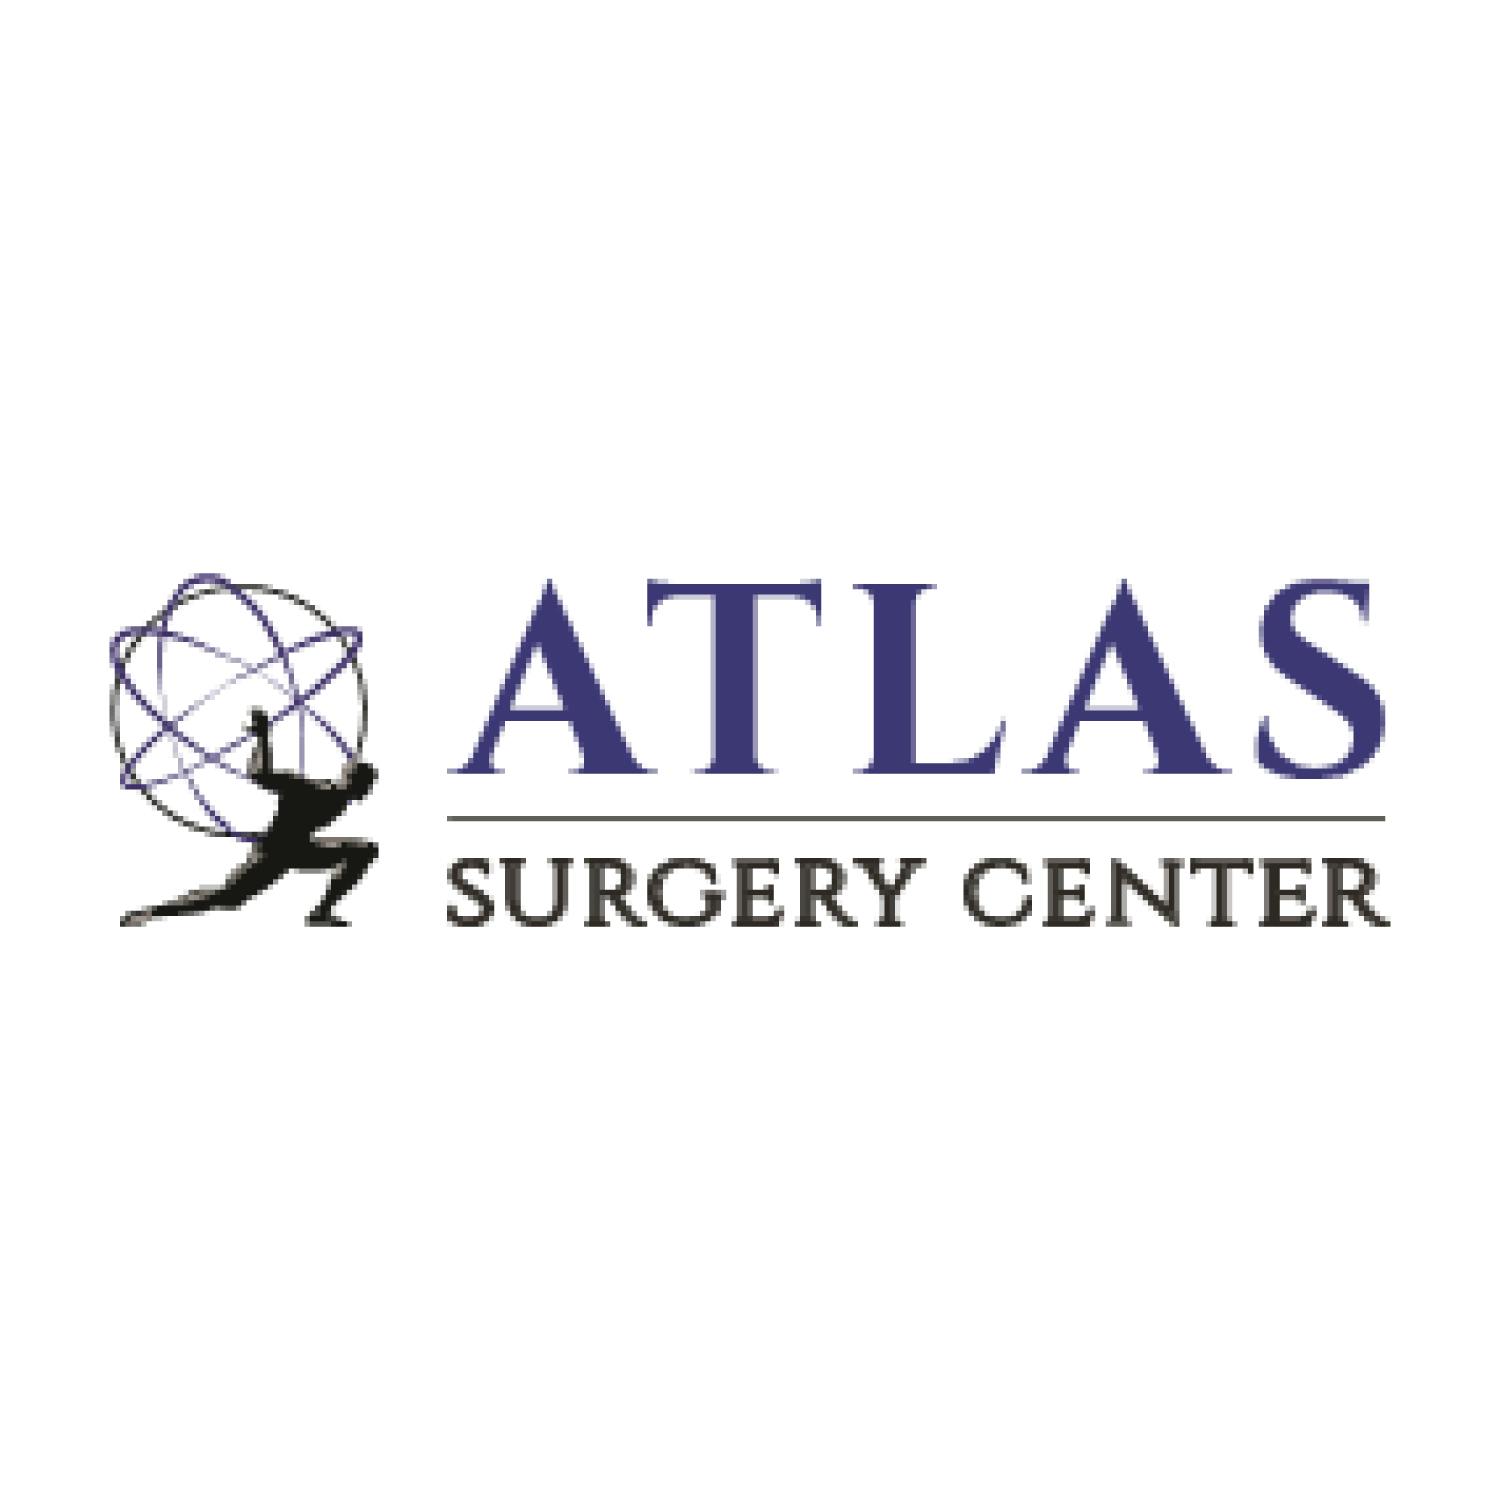 Atlast Surgery Center logo